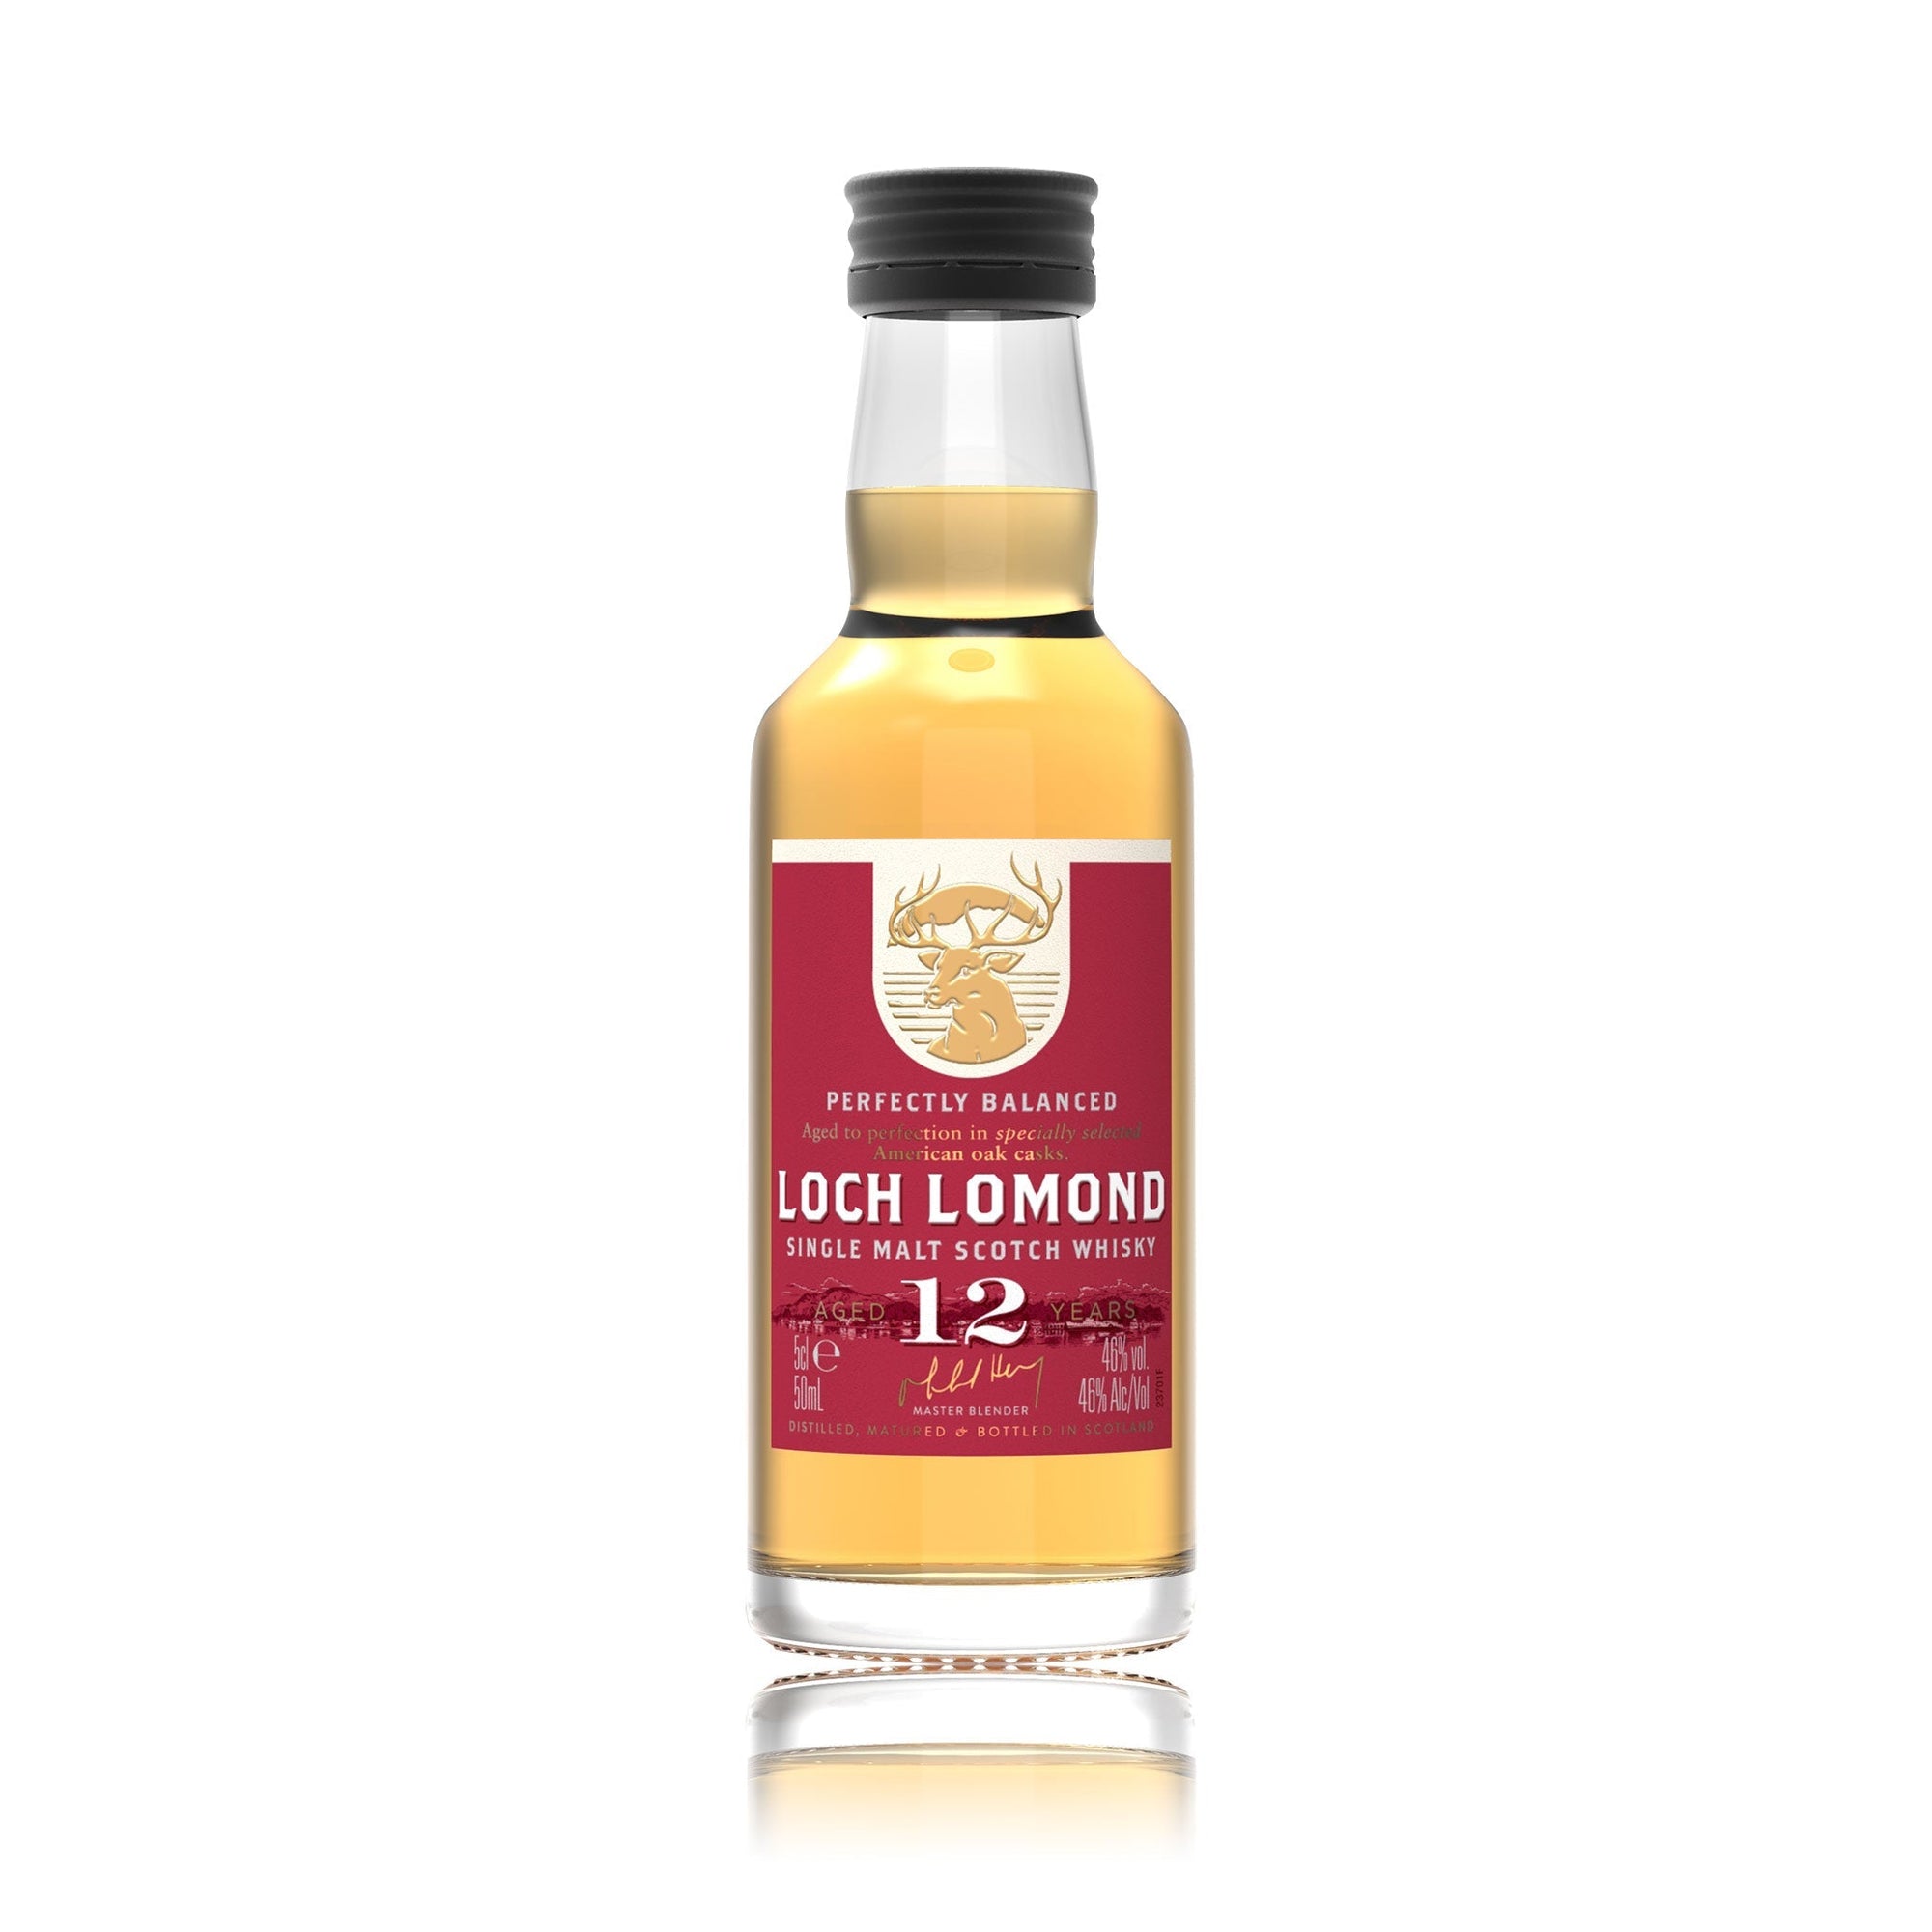 Loch Lomond 12 Year Old 5cl Whisky Miniature - Loch Lomond Group